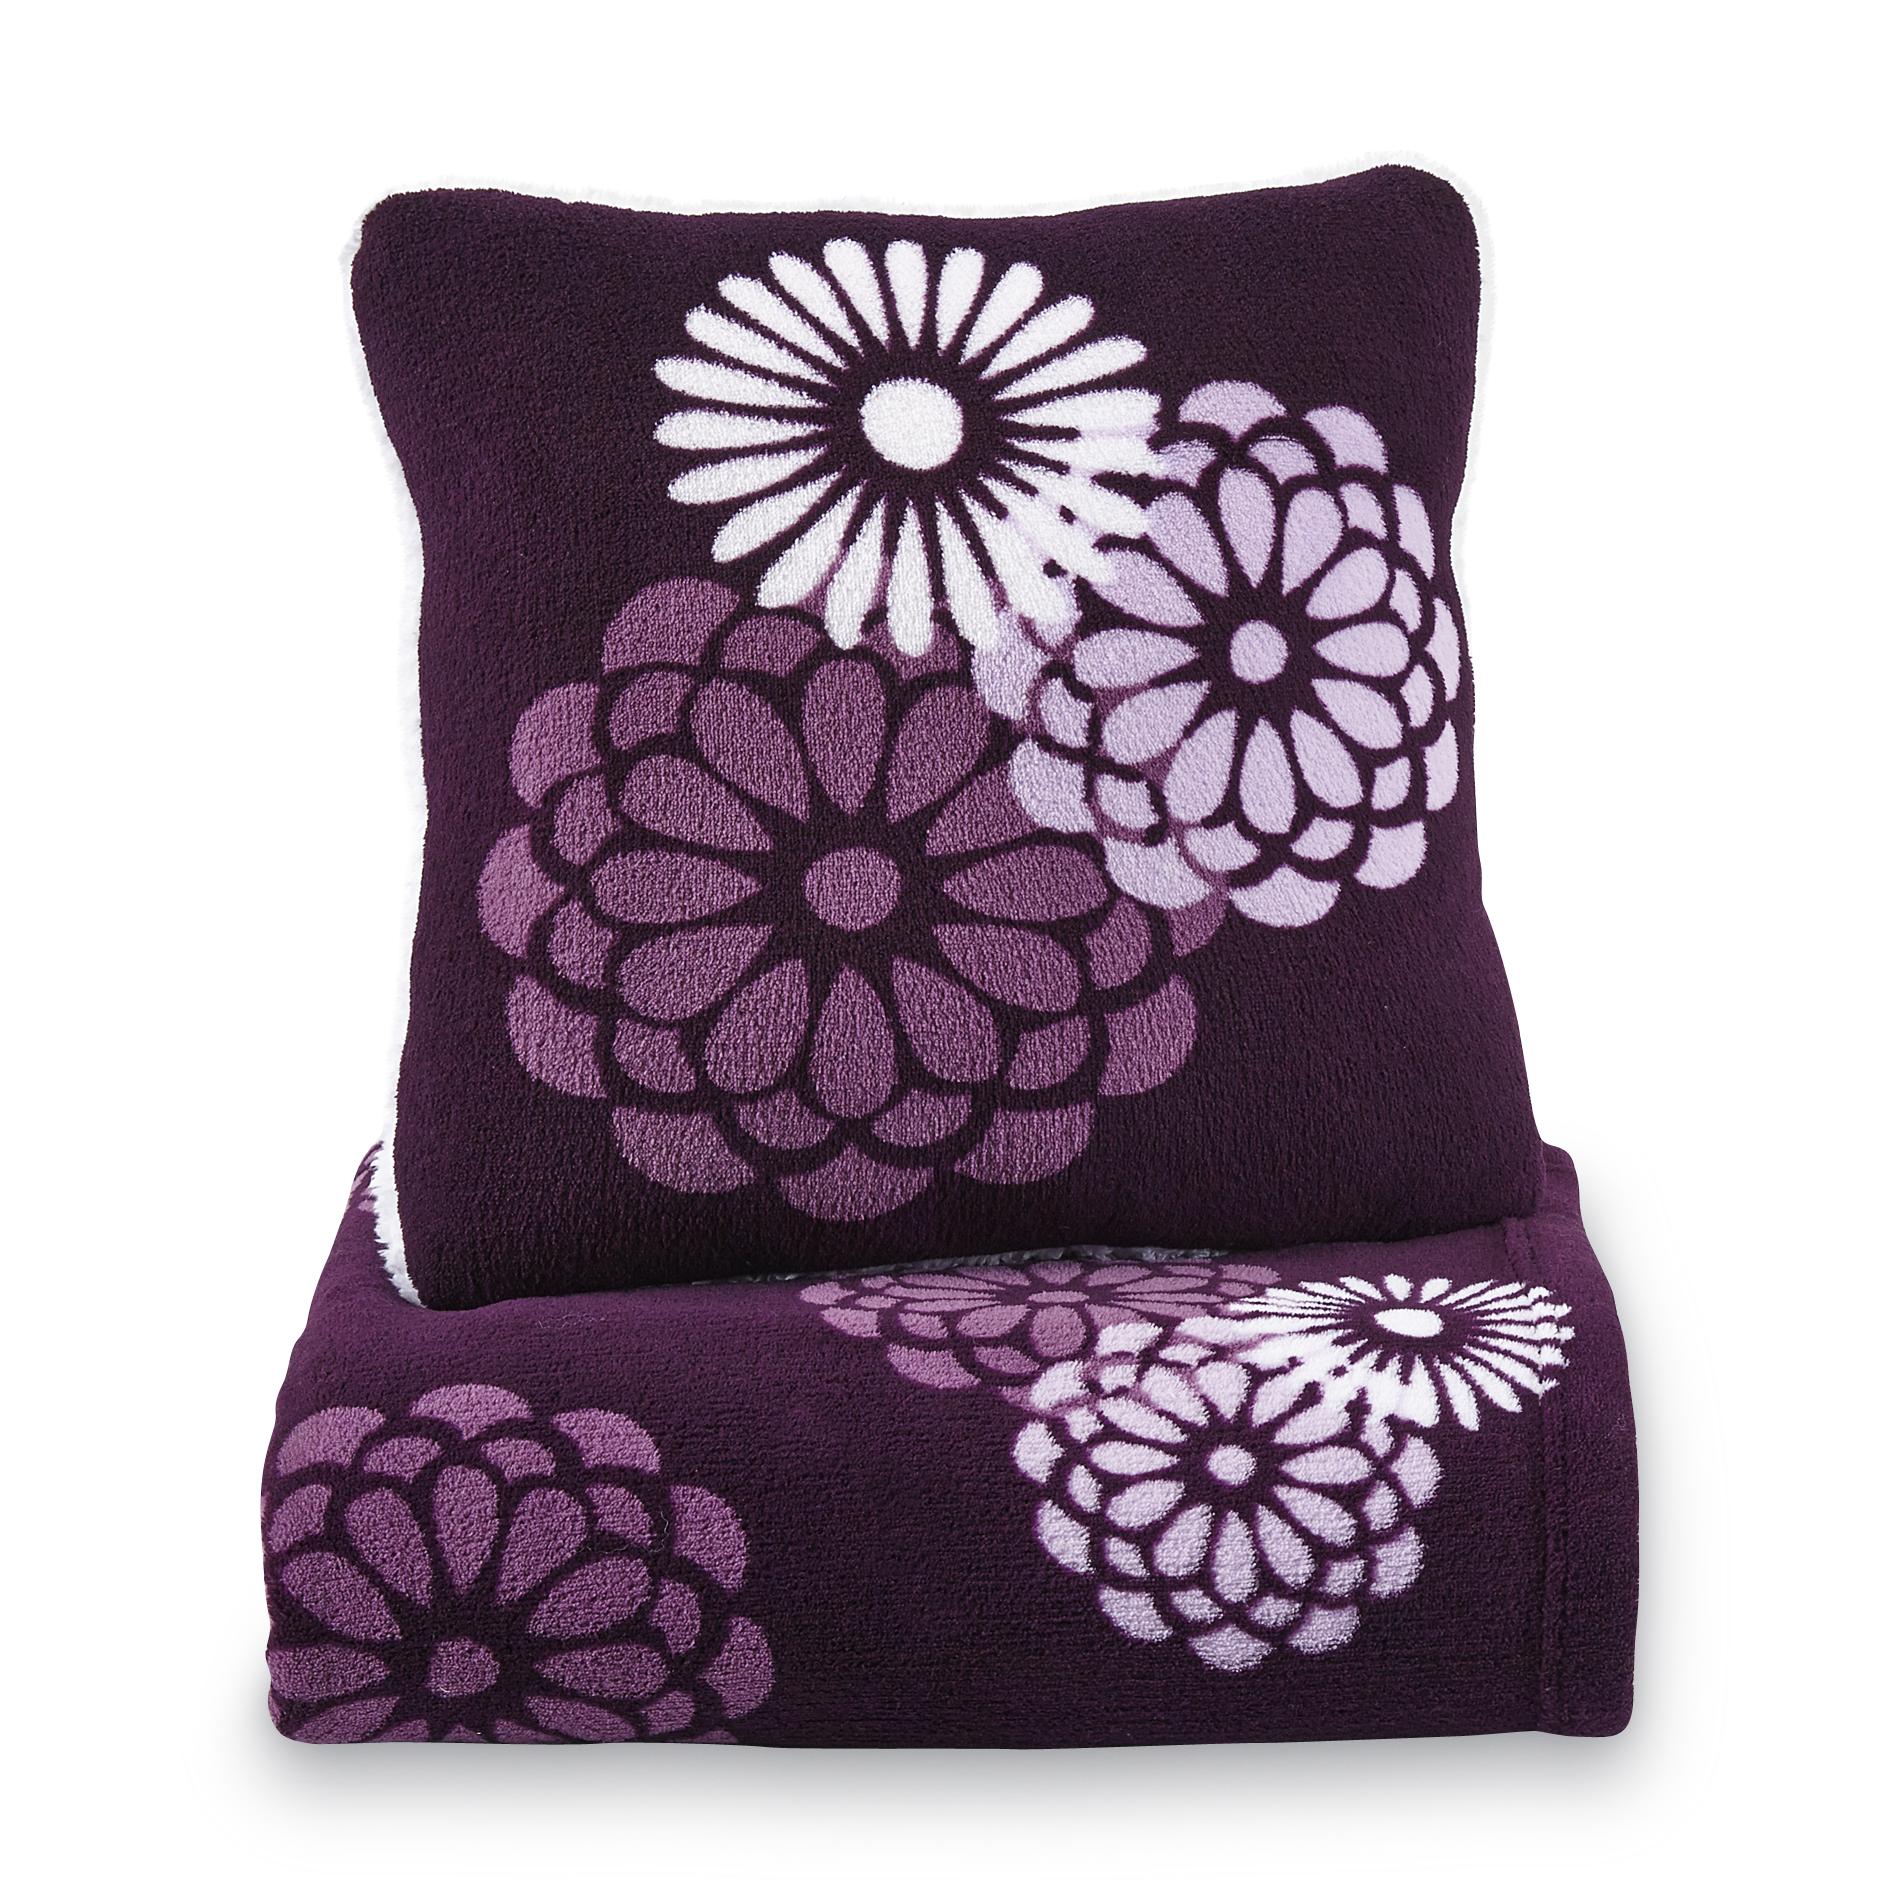 Cannon Microplush Pillow & Throw Set - Floral